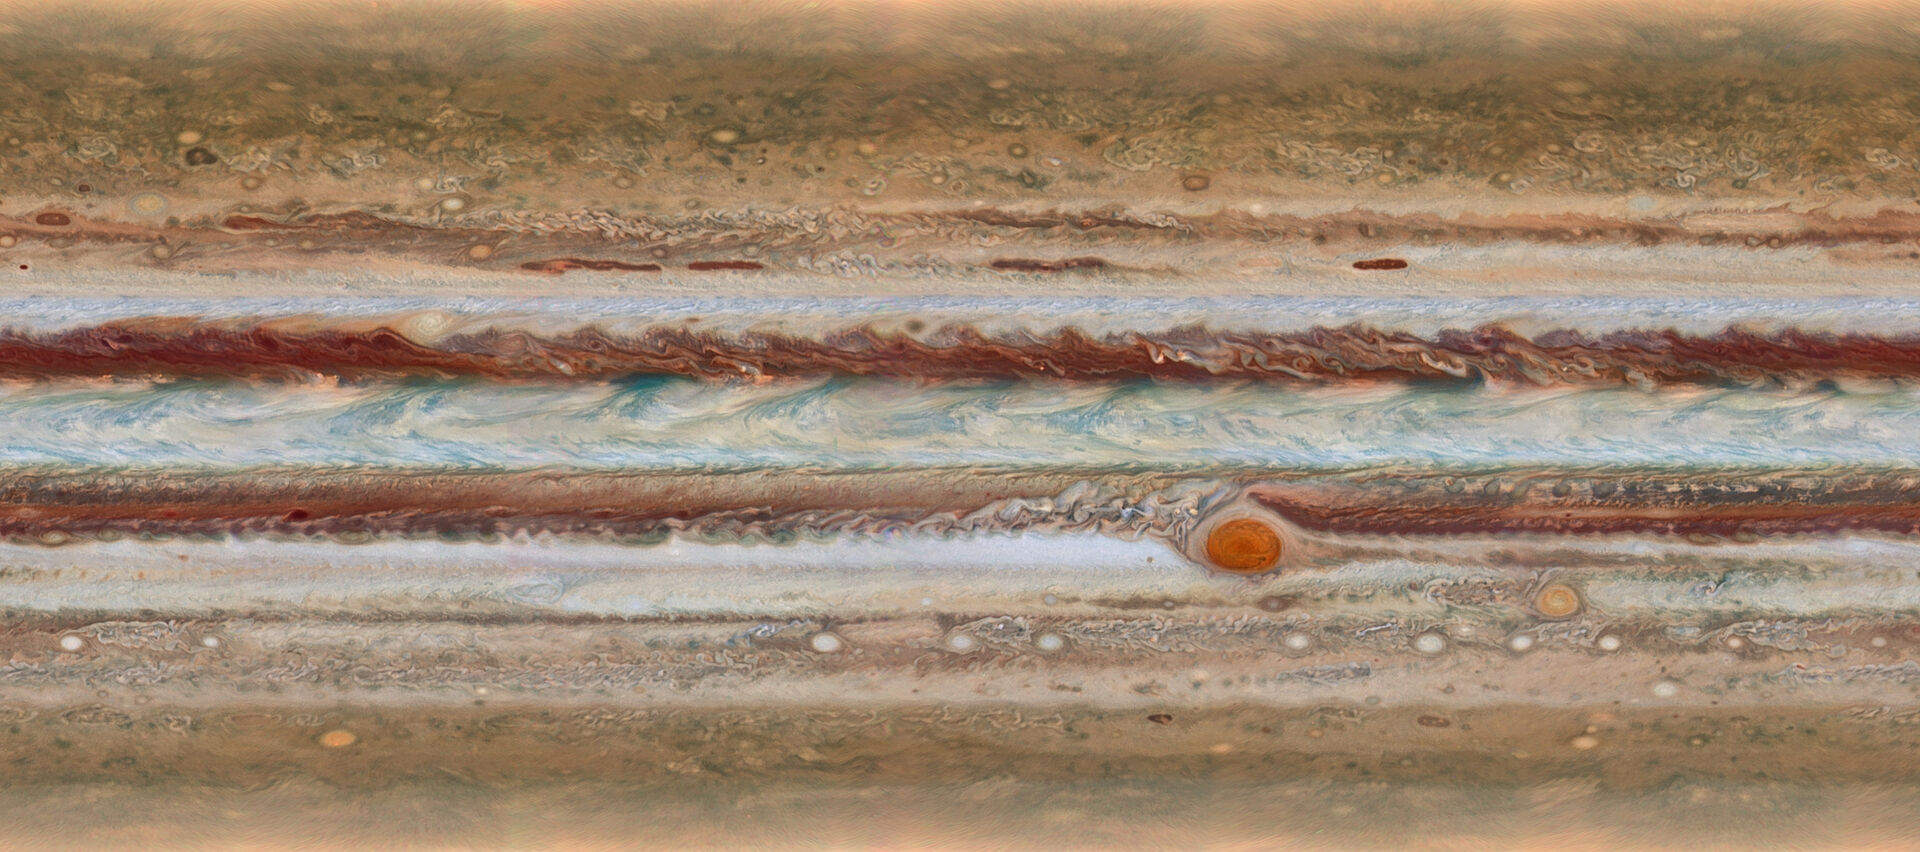 HST's image of the planet Jupiter.